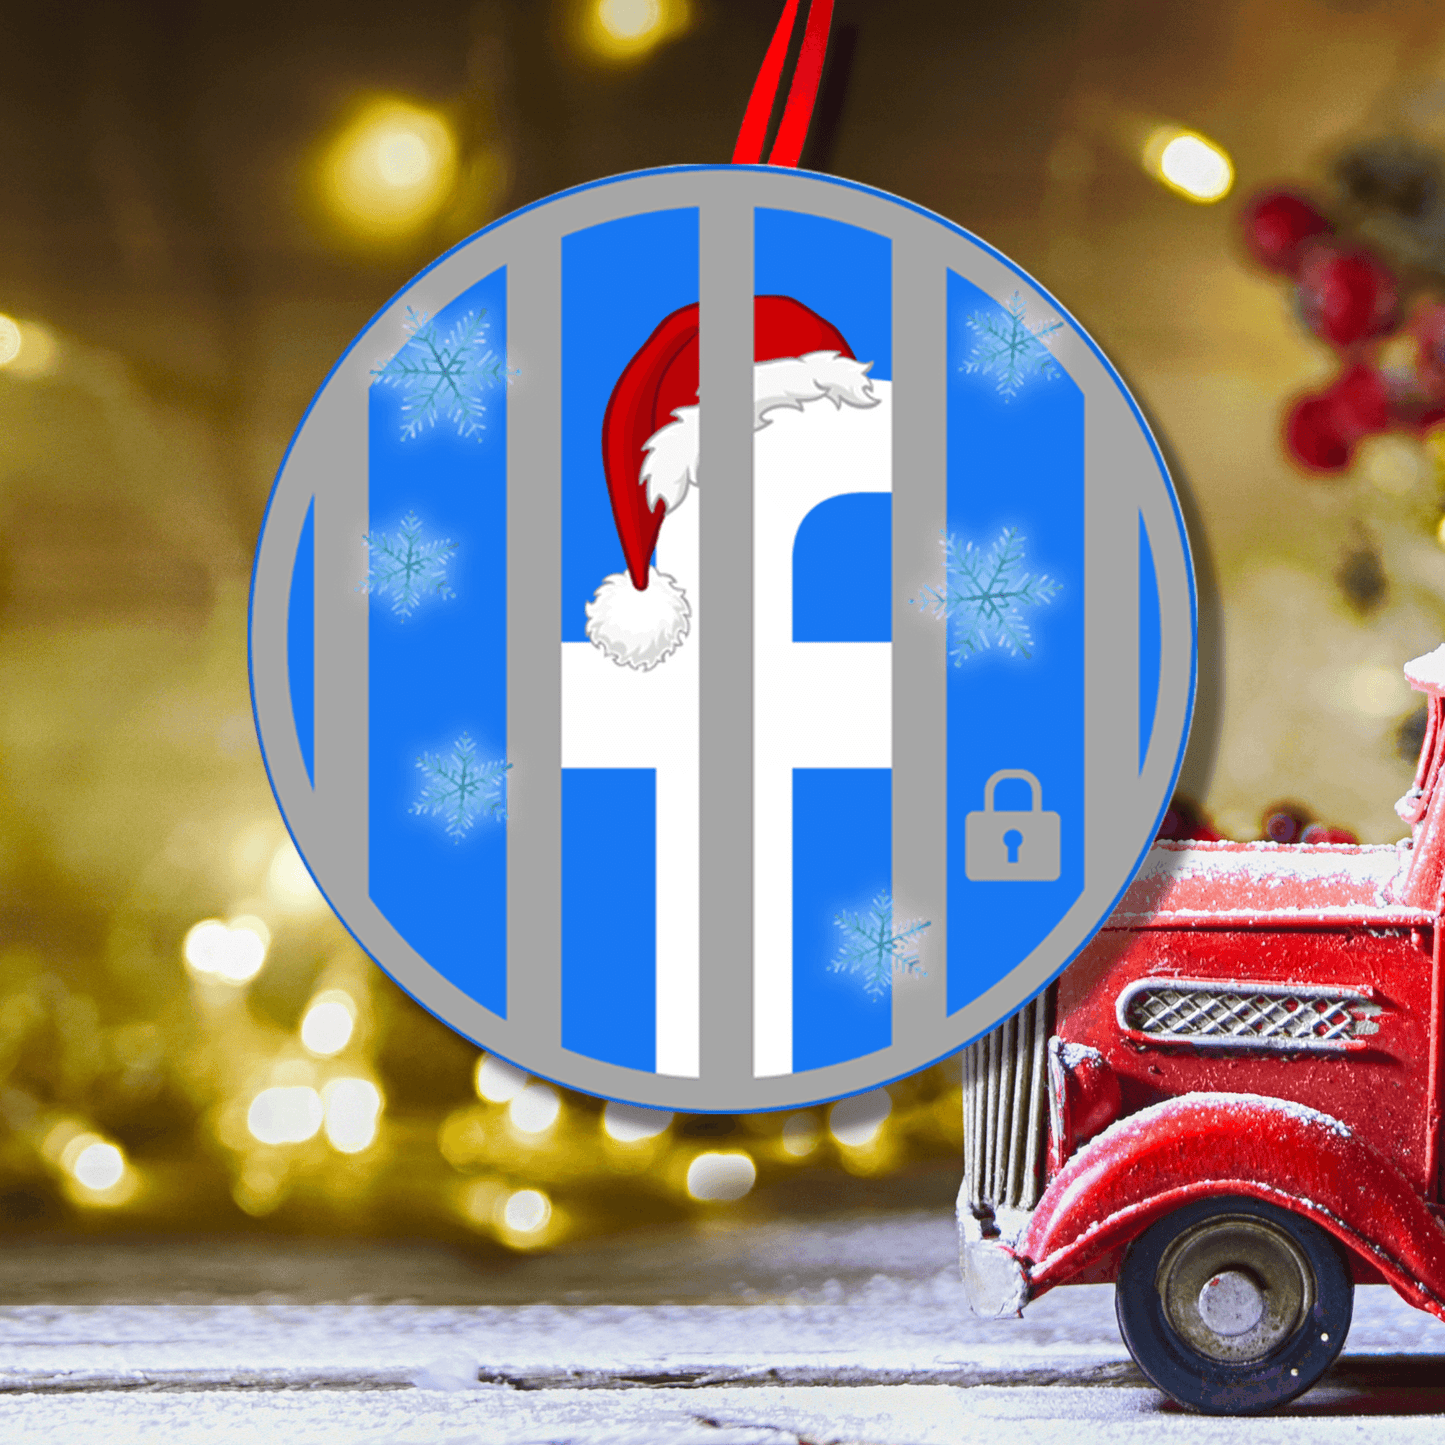 Facebook Jail Christmas Ornament